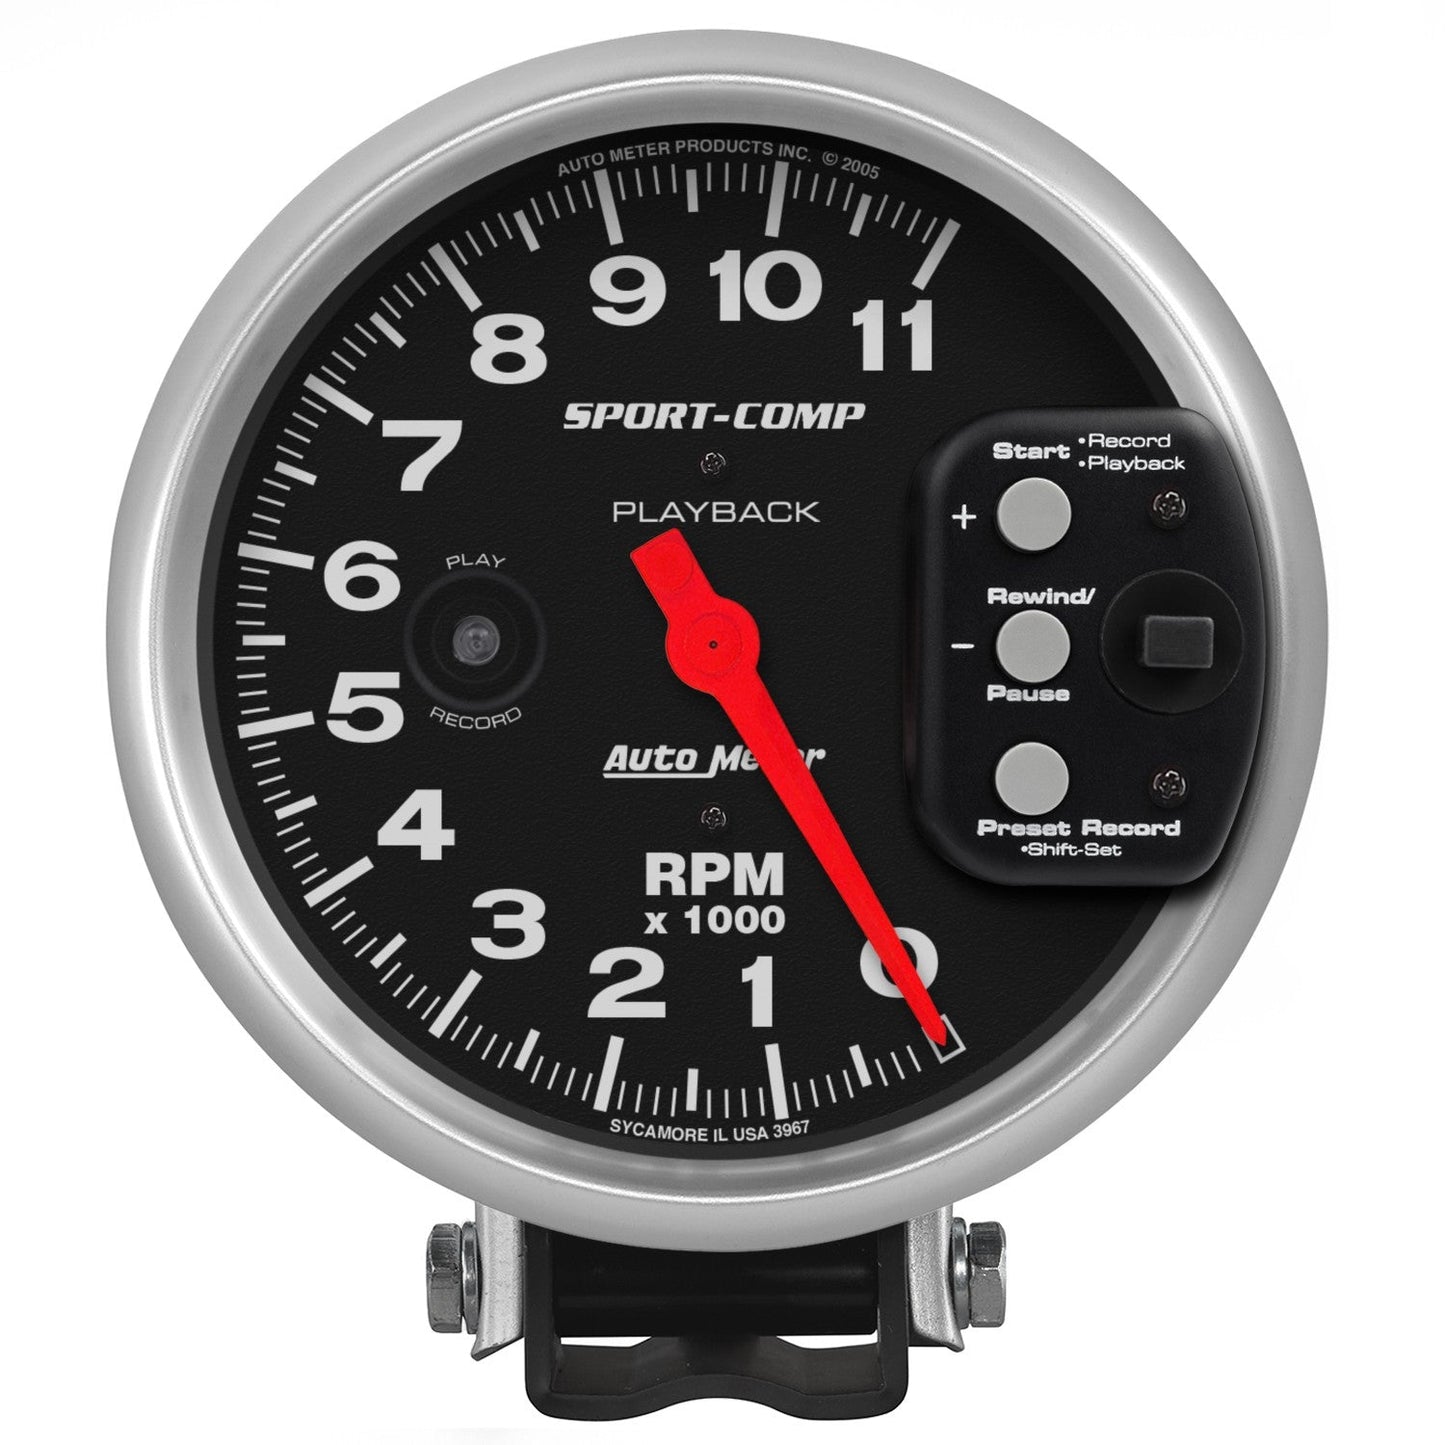 Auto Meter - 5" PEDESTAL PLAYBACK TACHOMETER, 0-11,000 RPM, SPORT-COMP (3967)